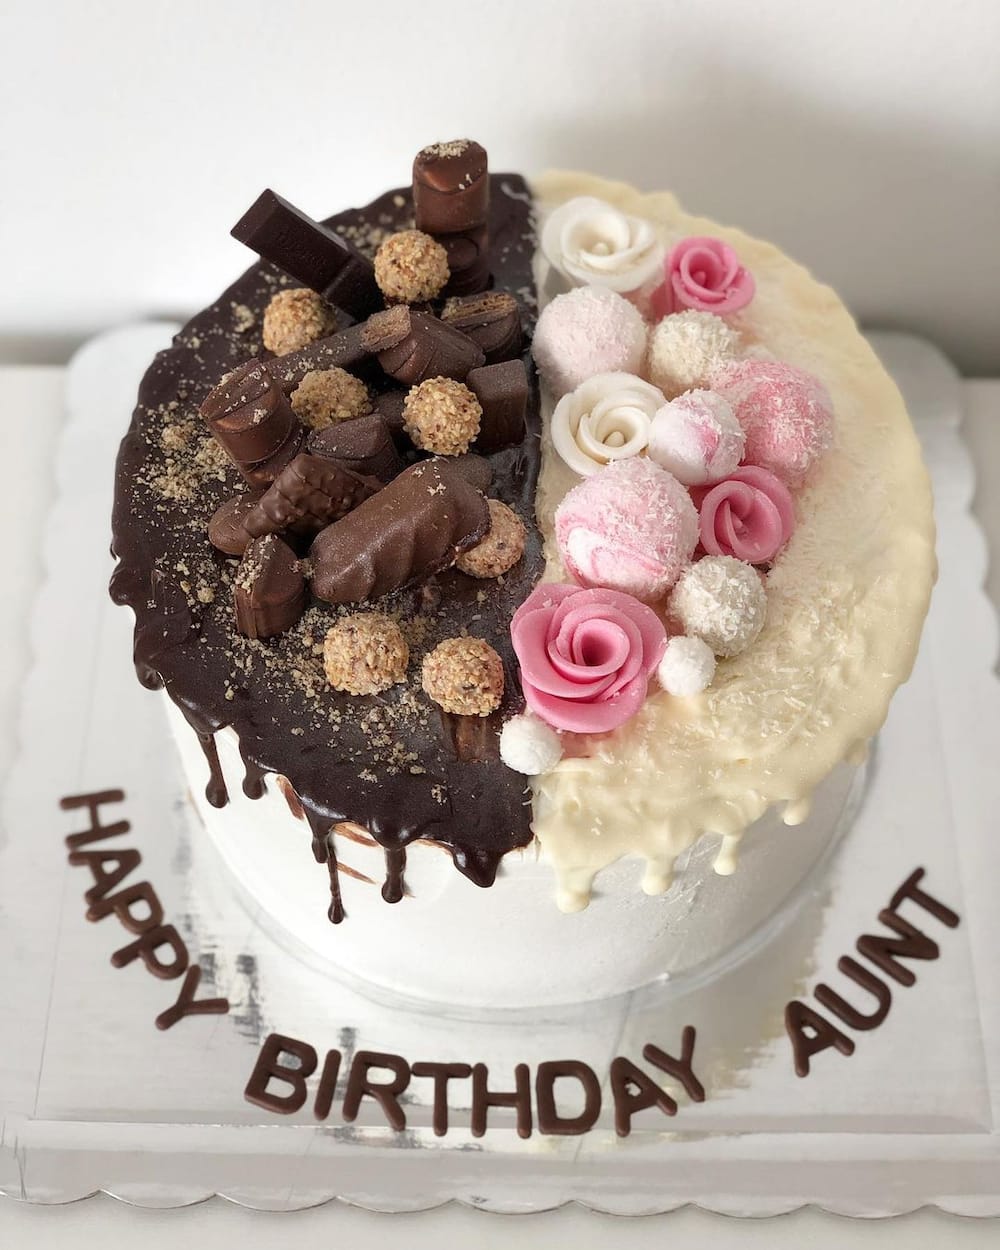 Happy birthday aunty messages